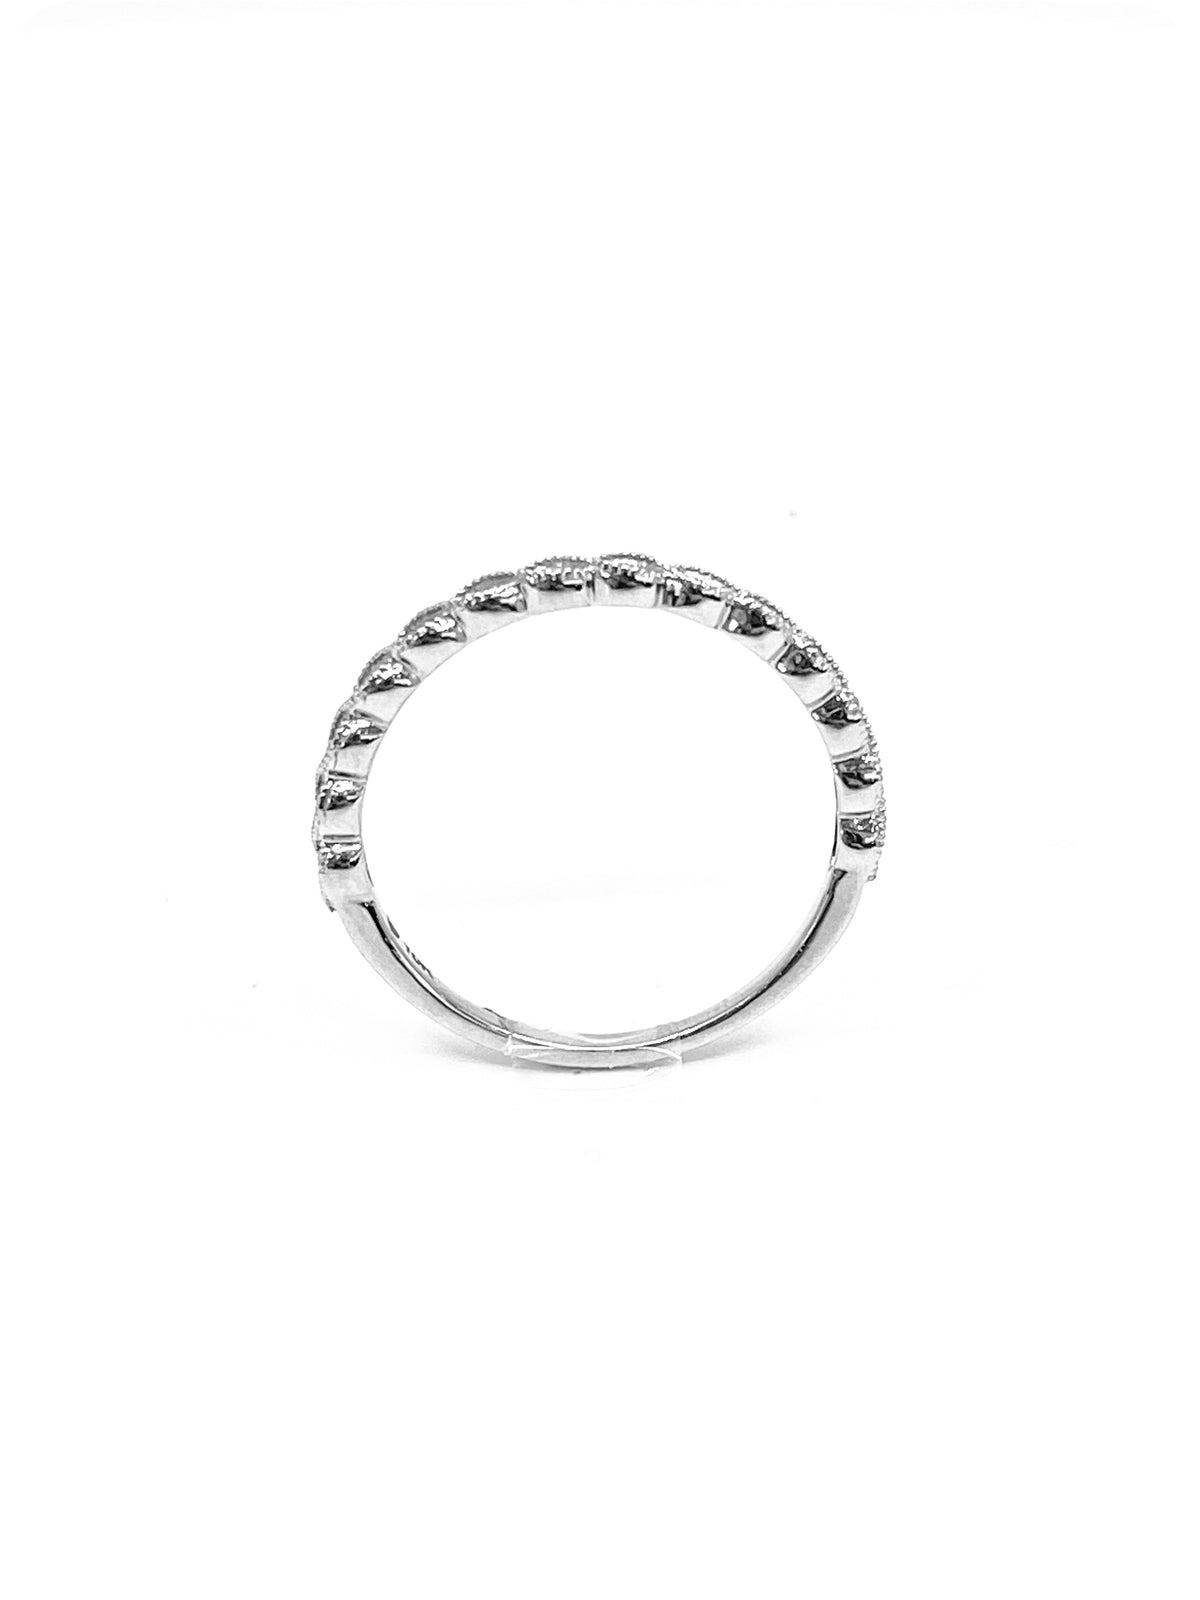 10K White Gold 0.07ctt Diamond Round-Cut Ring, Size 7